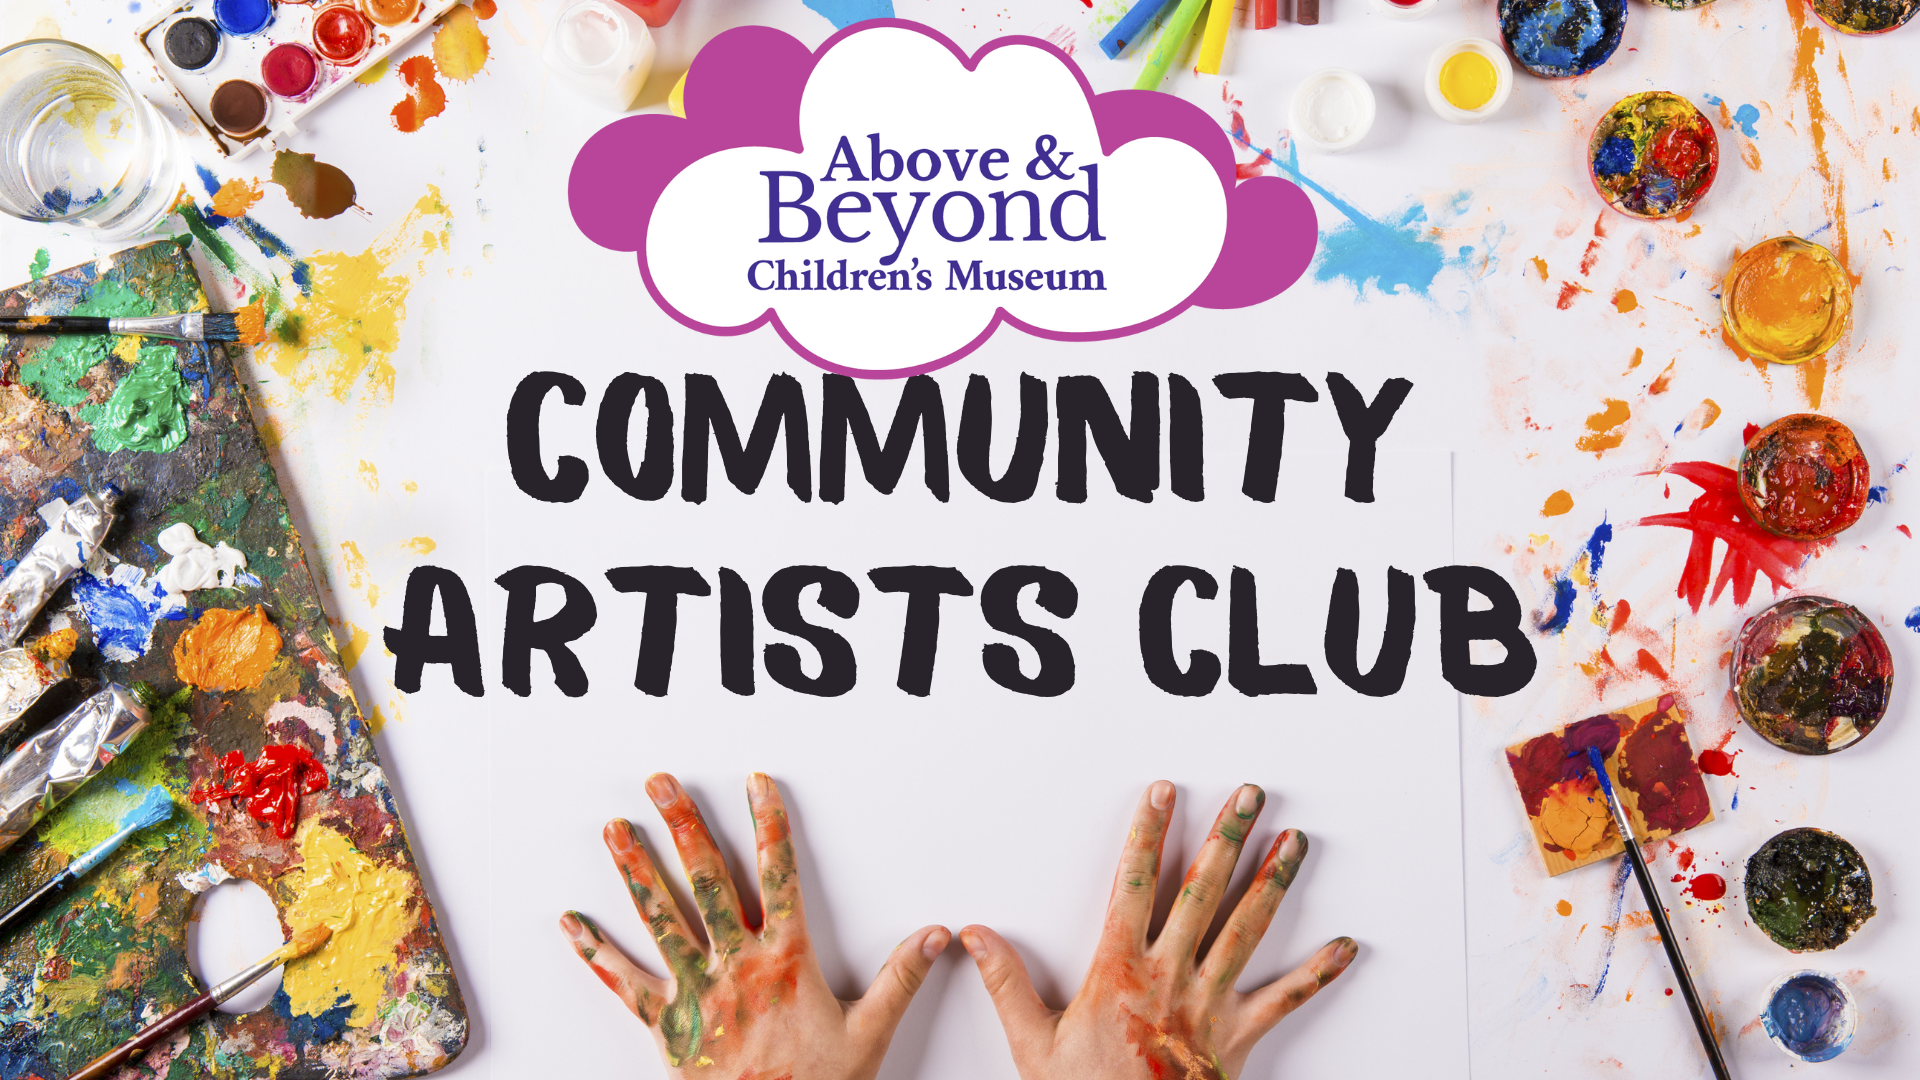 Community Artist Club FB Banner v2